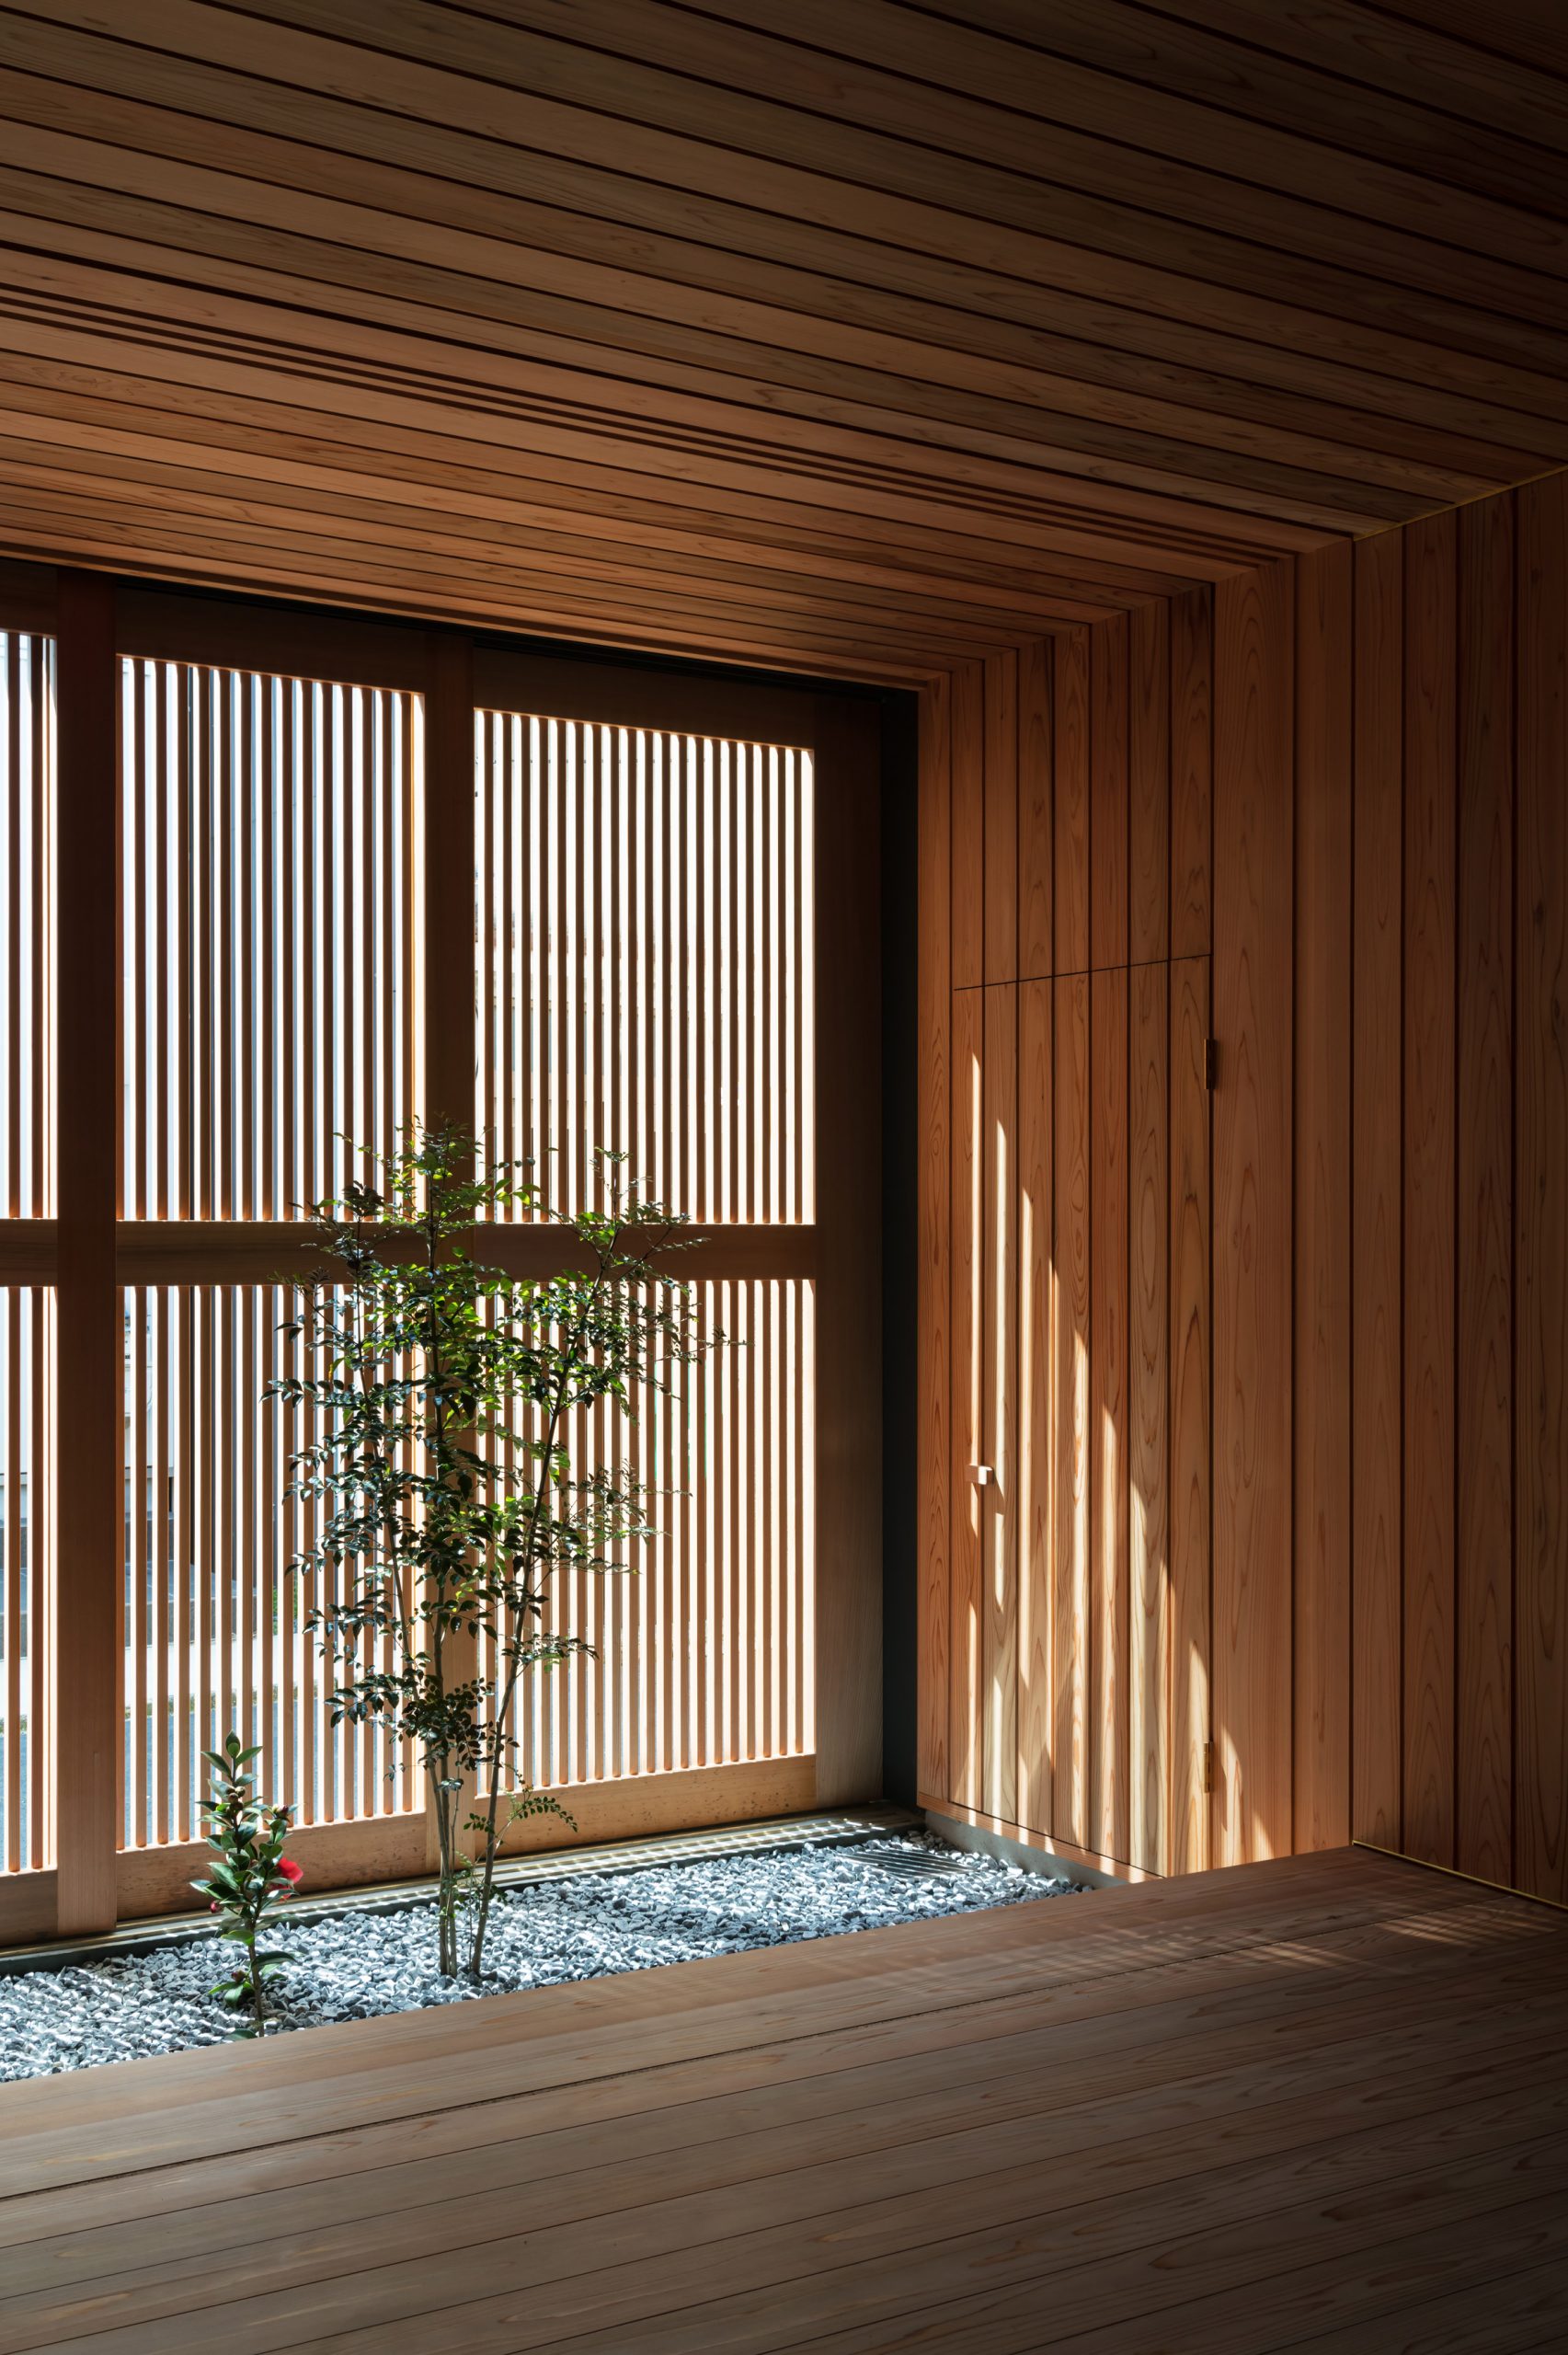 A cedar-lined living space